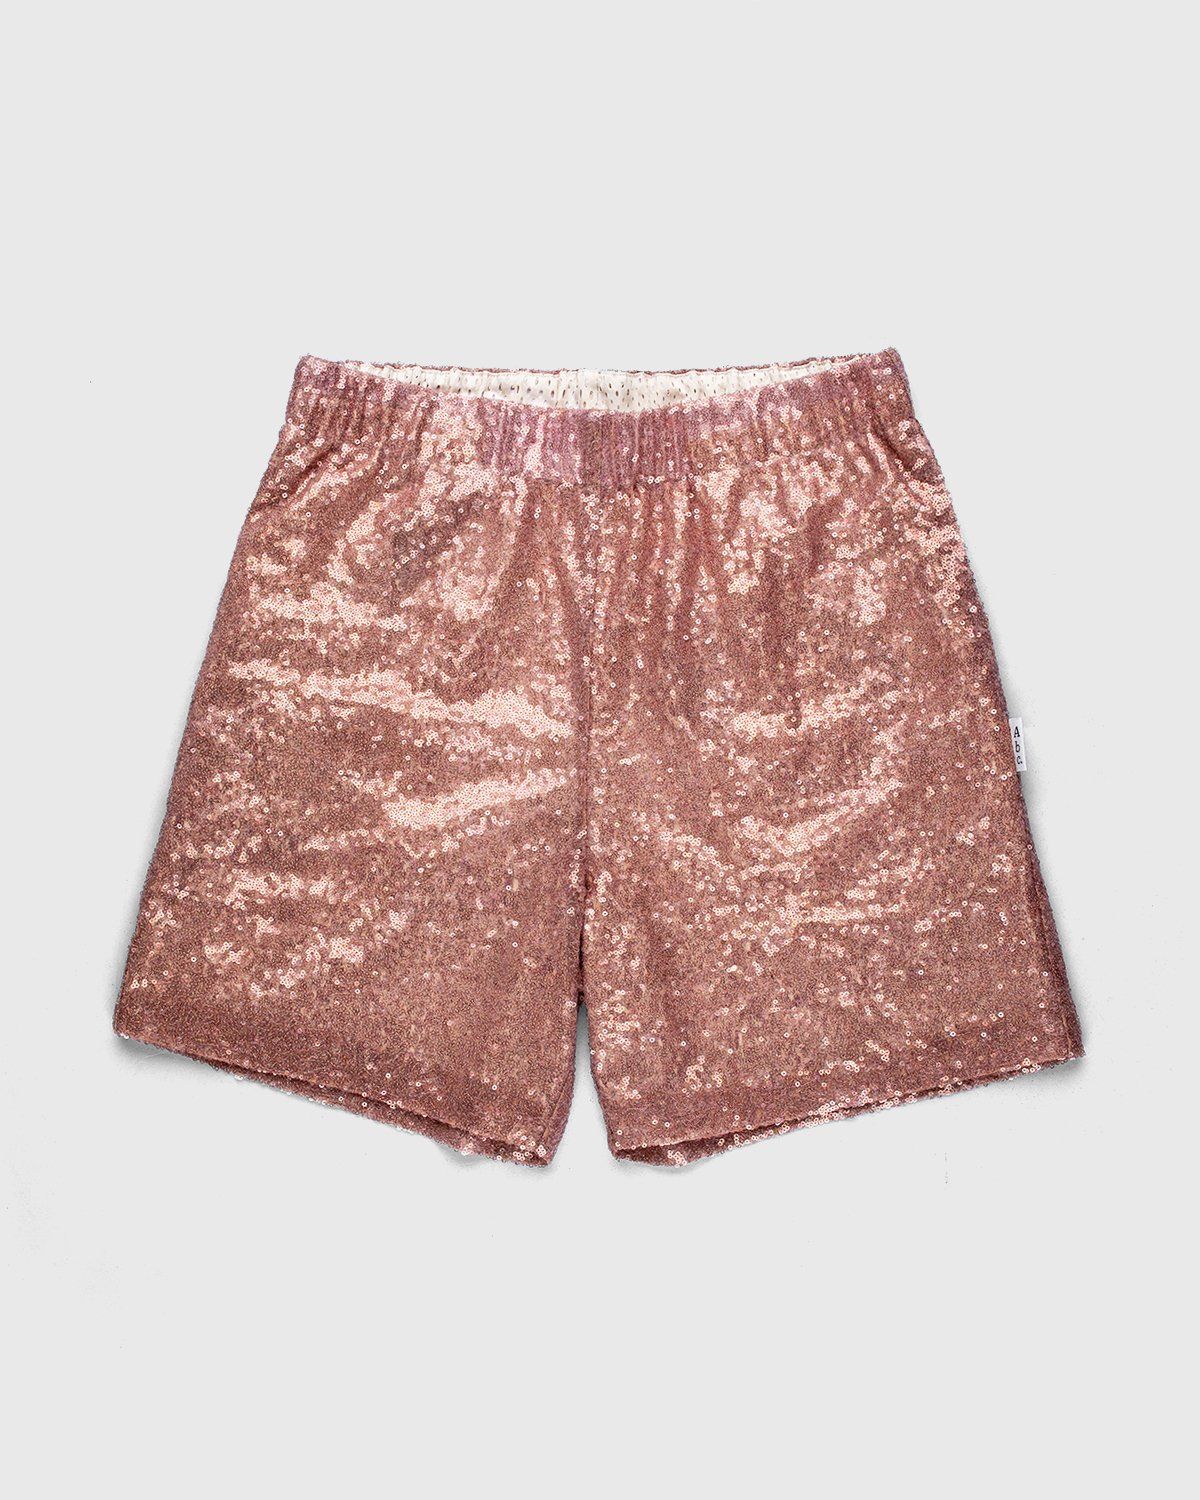 Advisory Board Crystals x Highsnobiety – Sequin Shorts Pink - Bermuda Cuts - Pink - Image 1